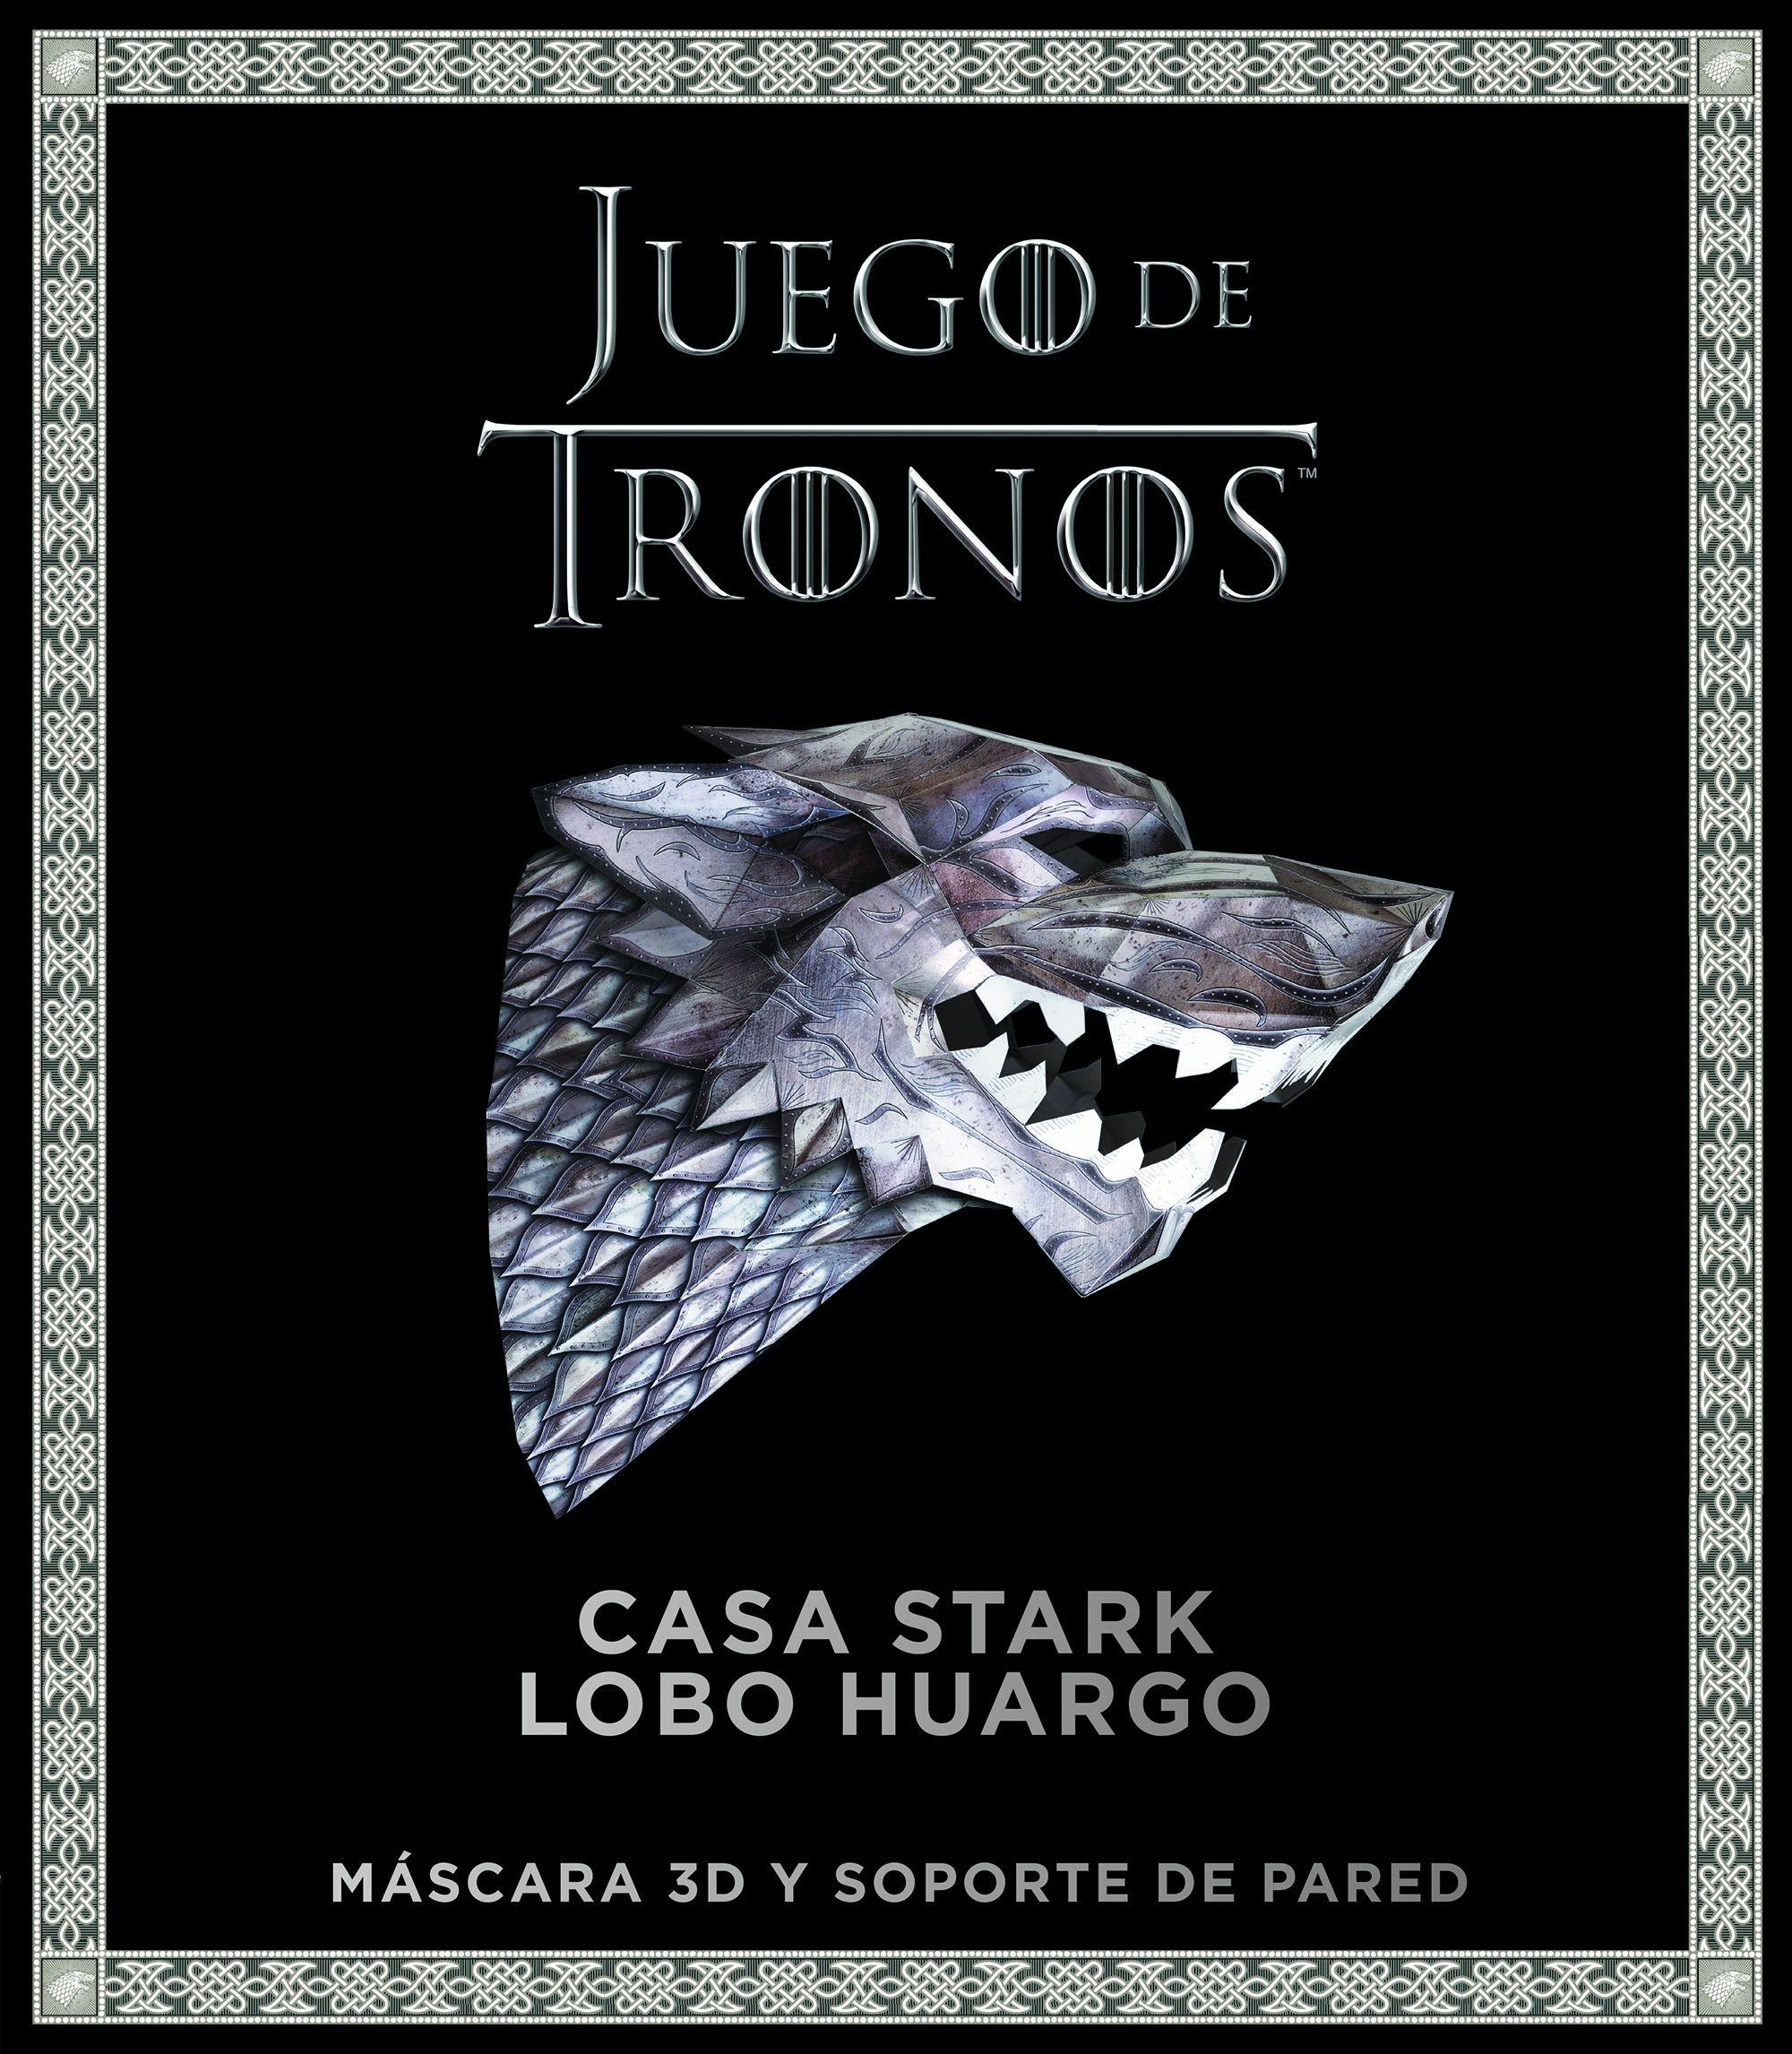 Juego de Tronos "Casa Stark: lobo huargo". 